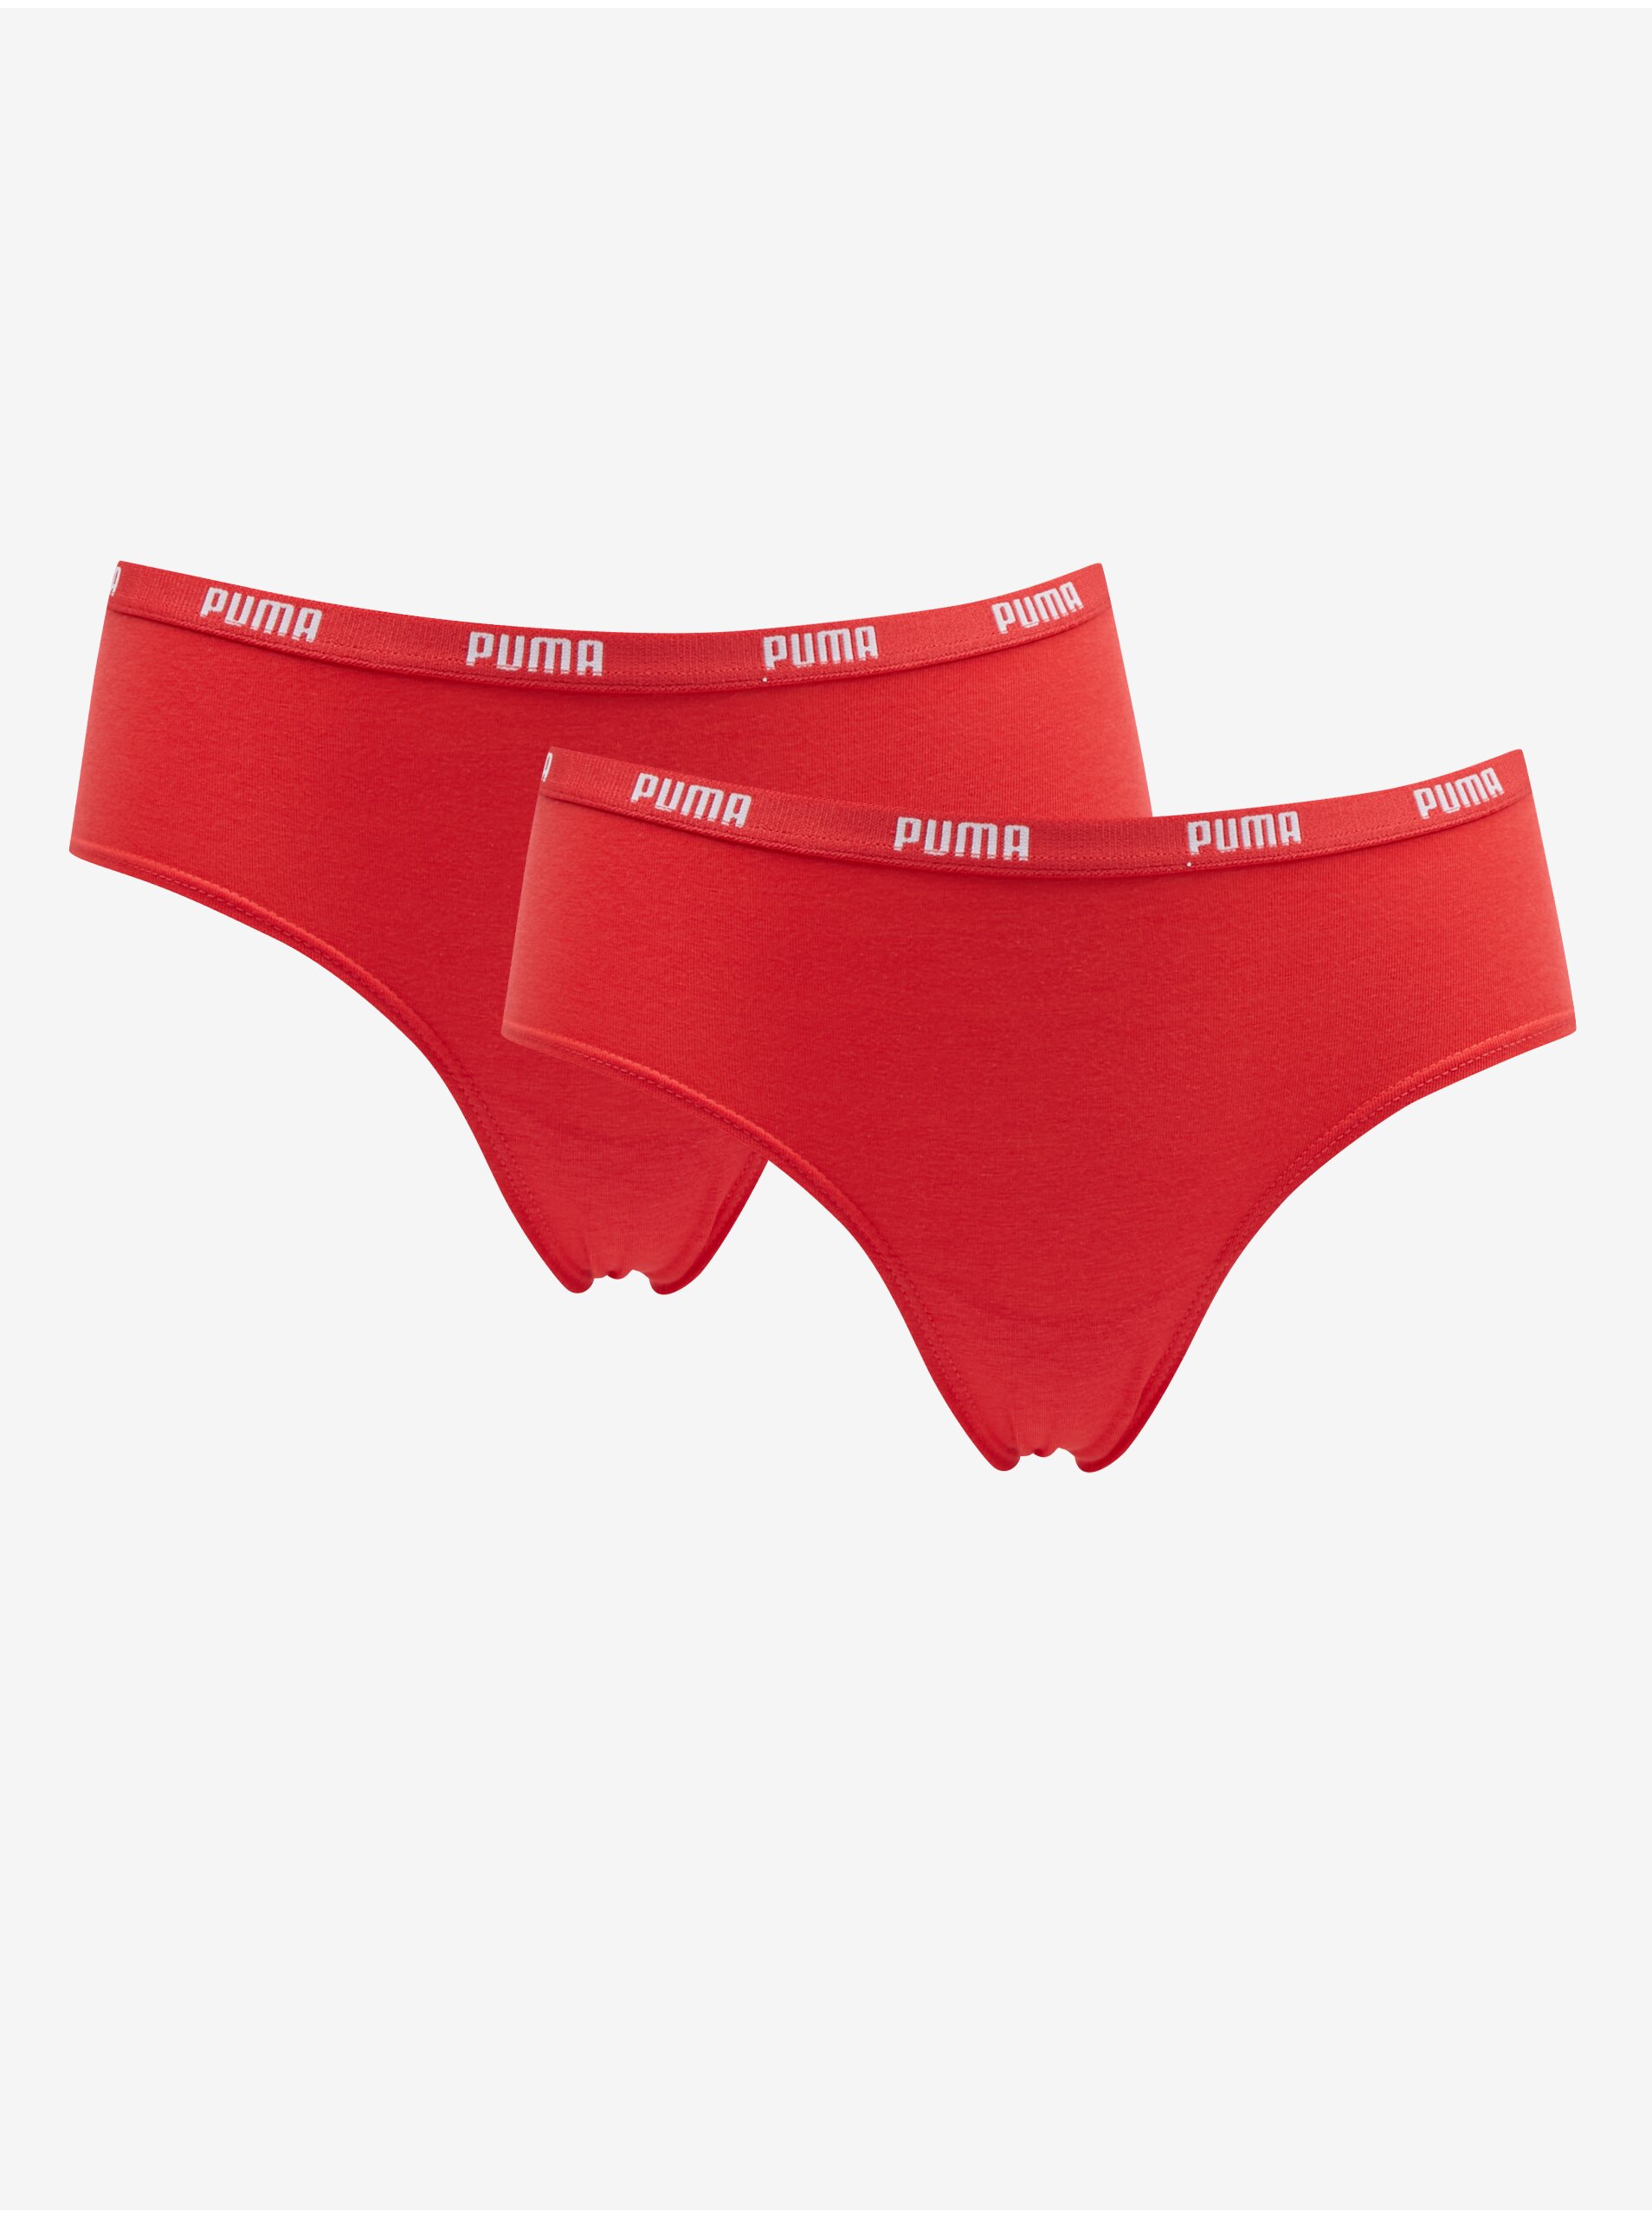 E-shop Sada dvou dámských kalhotek v červené barvě Puma